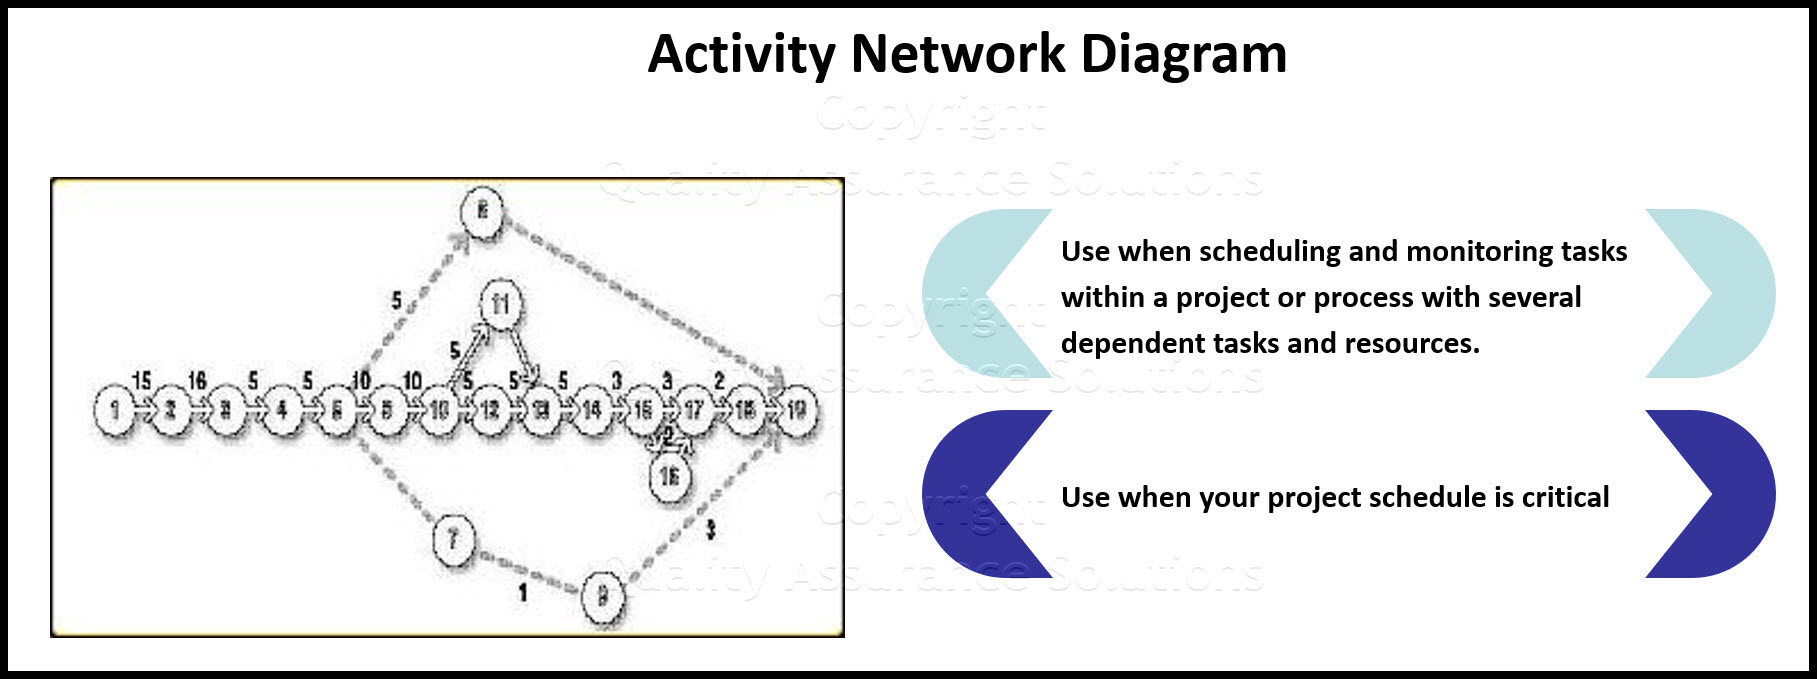 Details on Activity Network Diagram